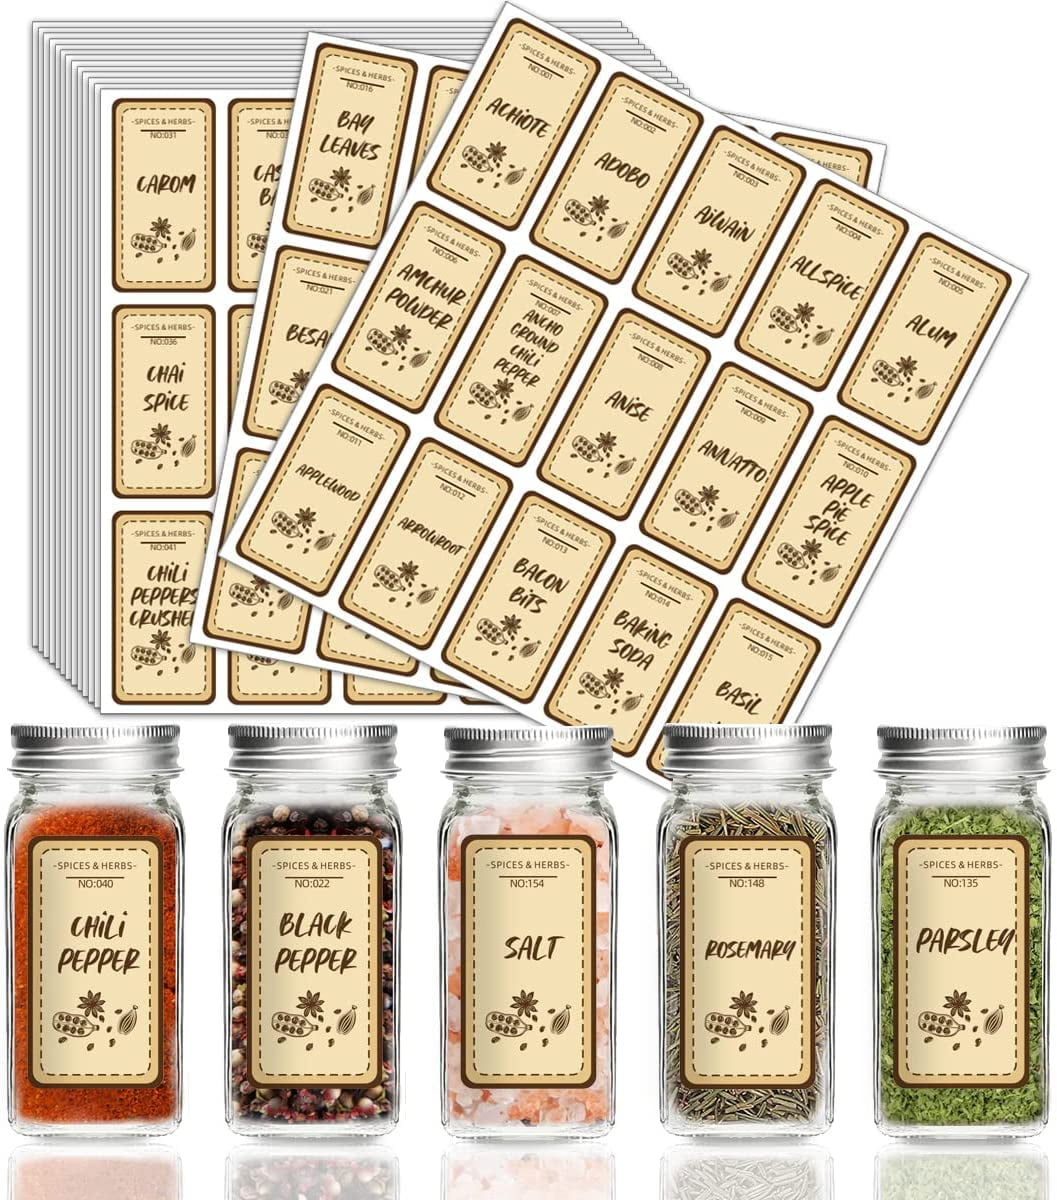 Spice Jar Labels – Idea Land